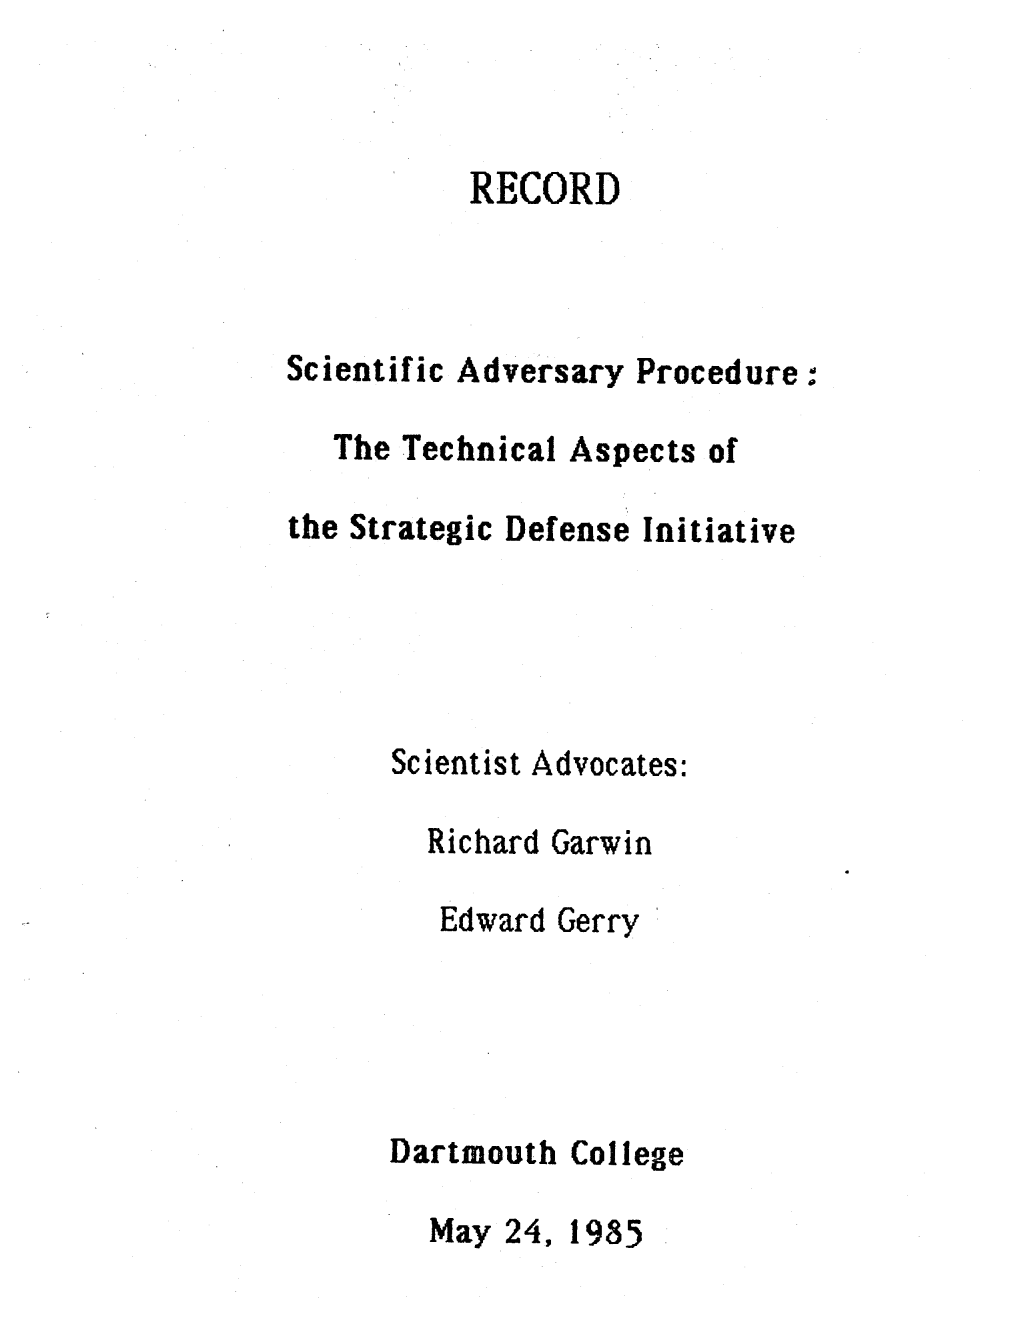 Scientific Adversary Procedure the Technical Aspects of the Strategic